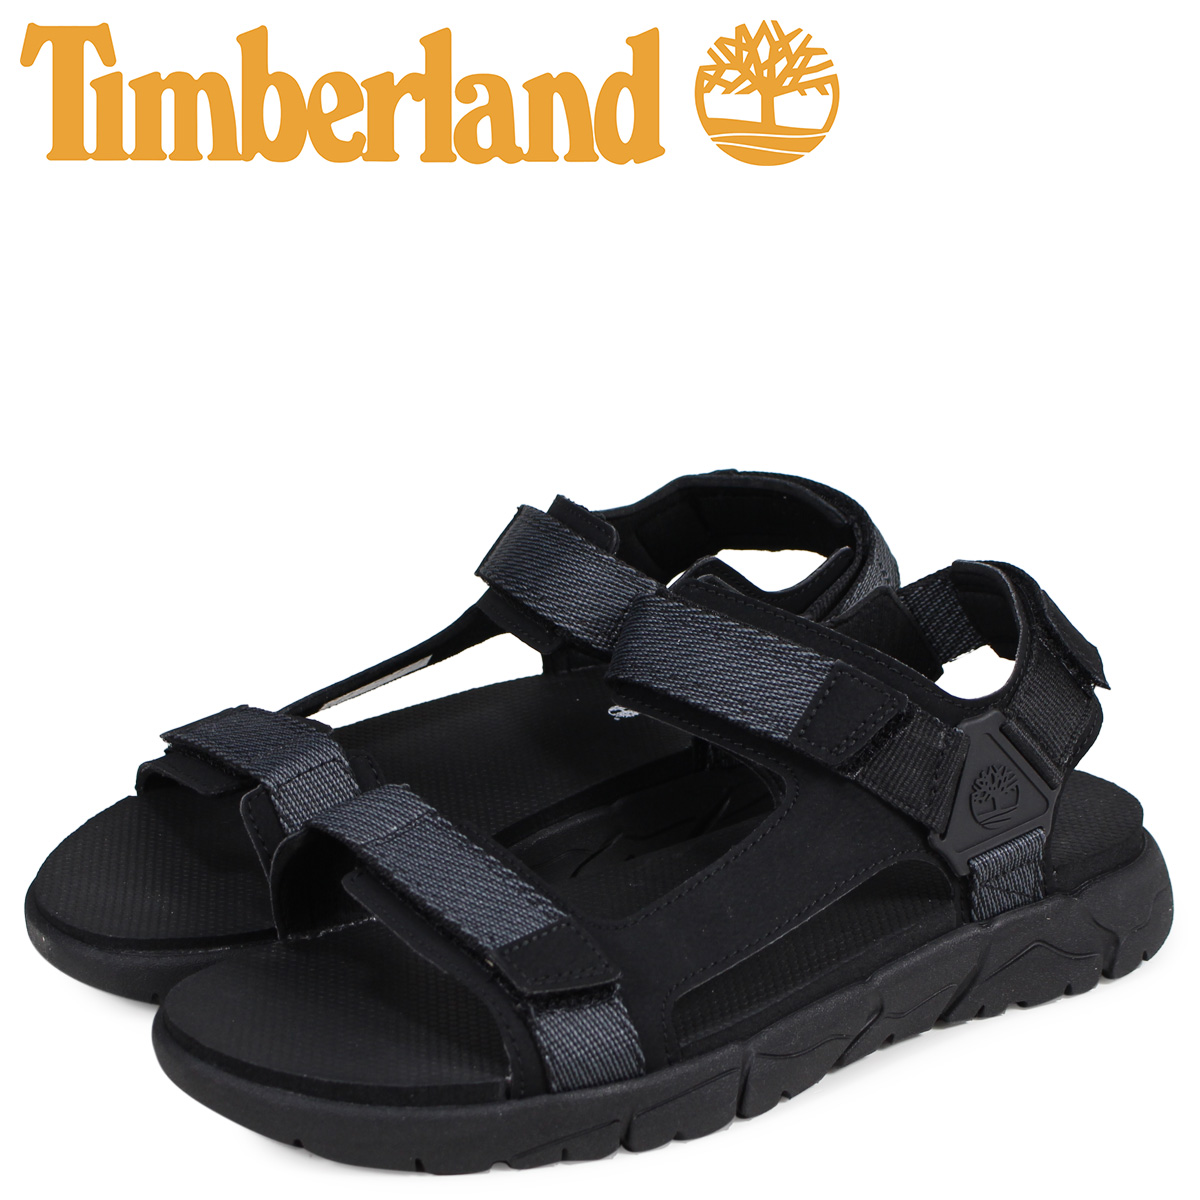 windham trail sandal